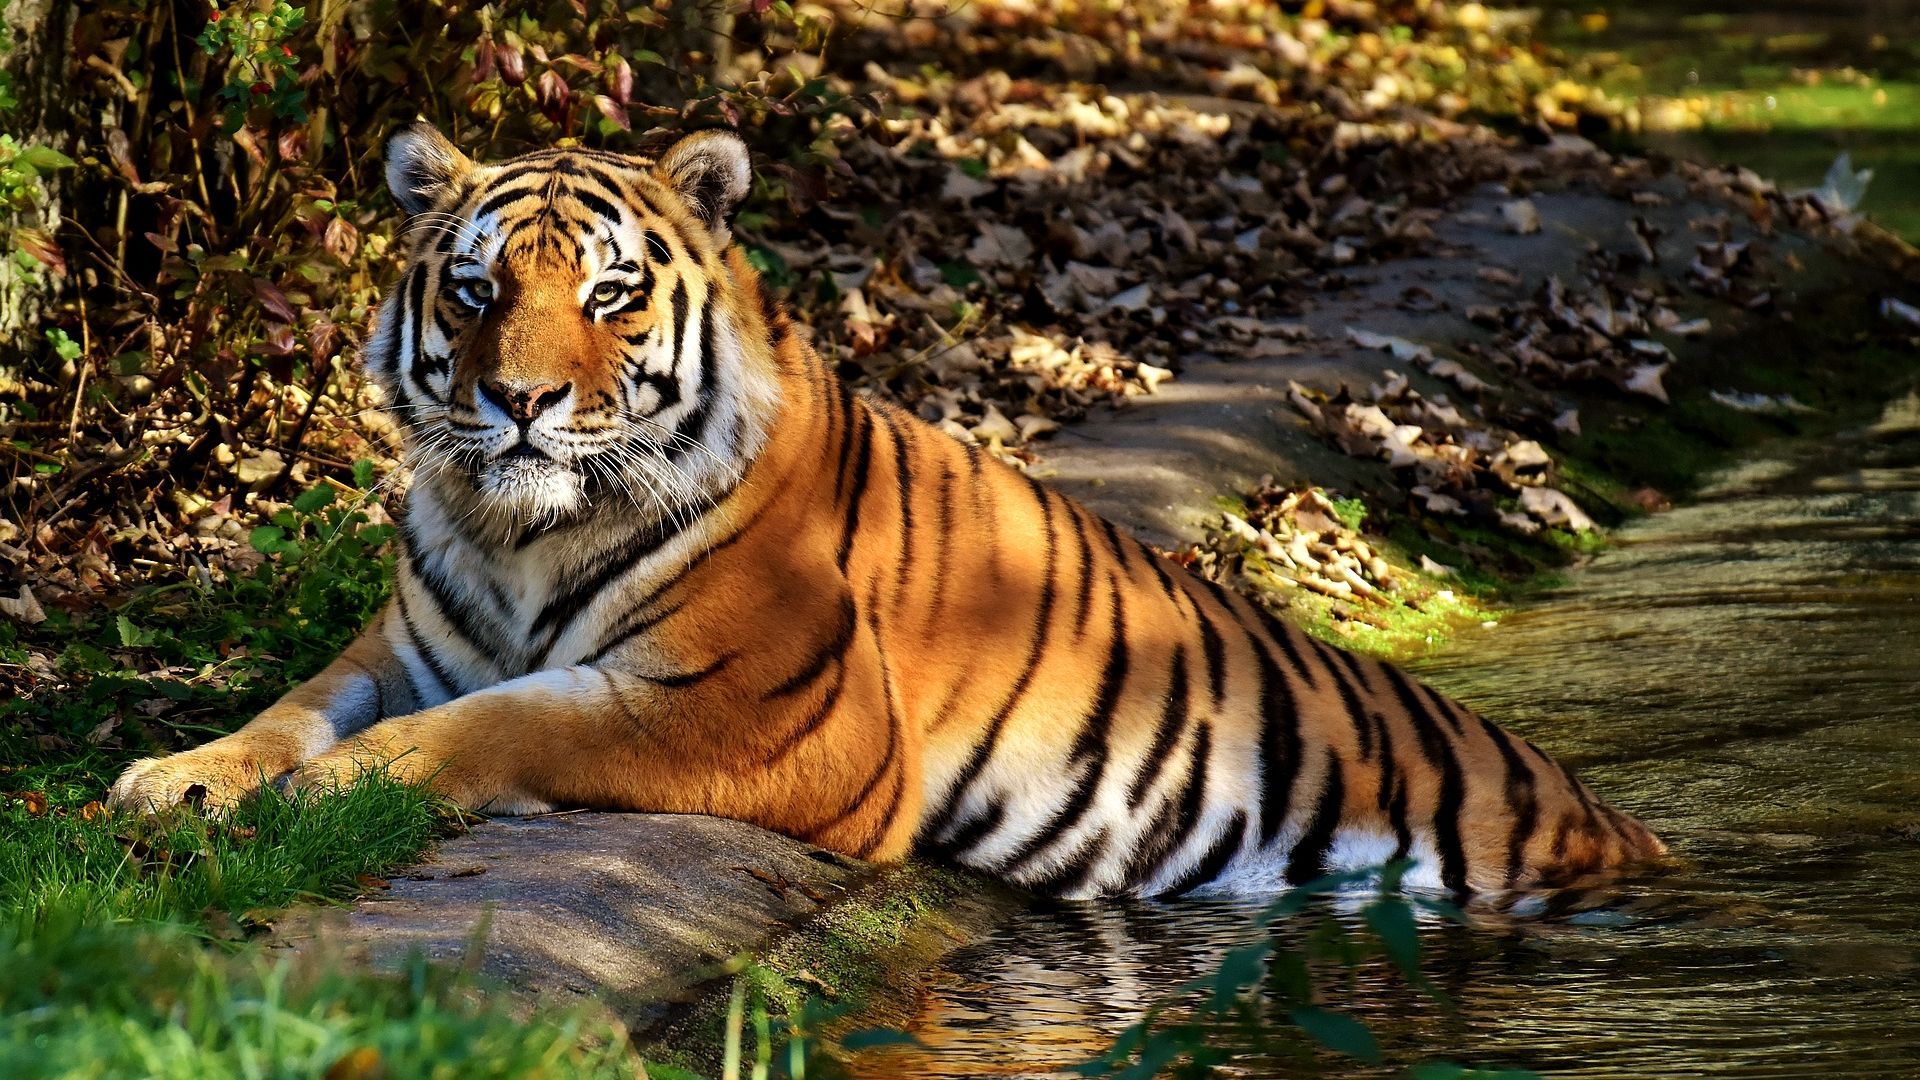 Tiger Relaxing in Water Wallpaper